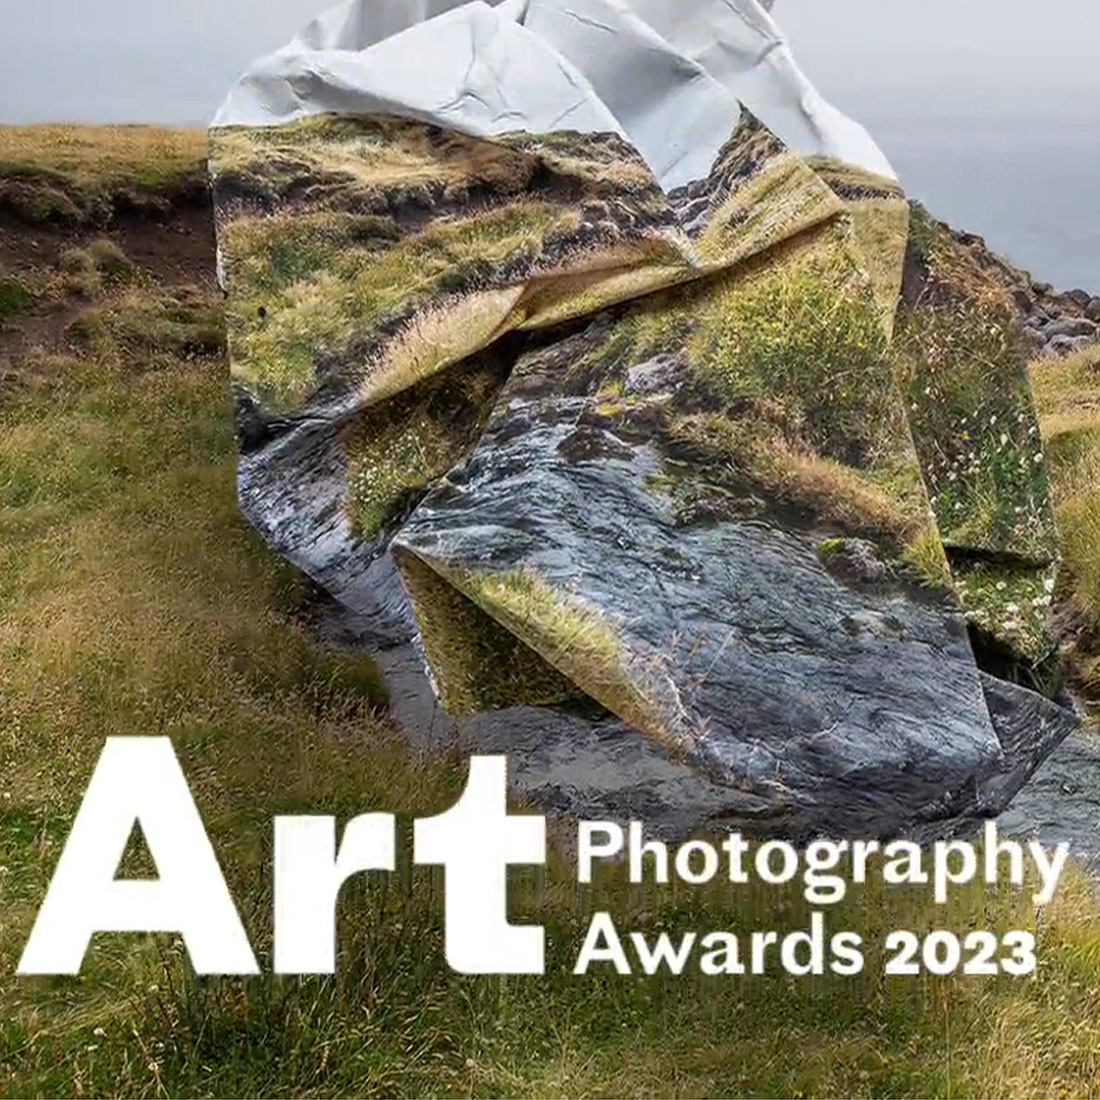 LensCulture Art Photography Awards 2023